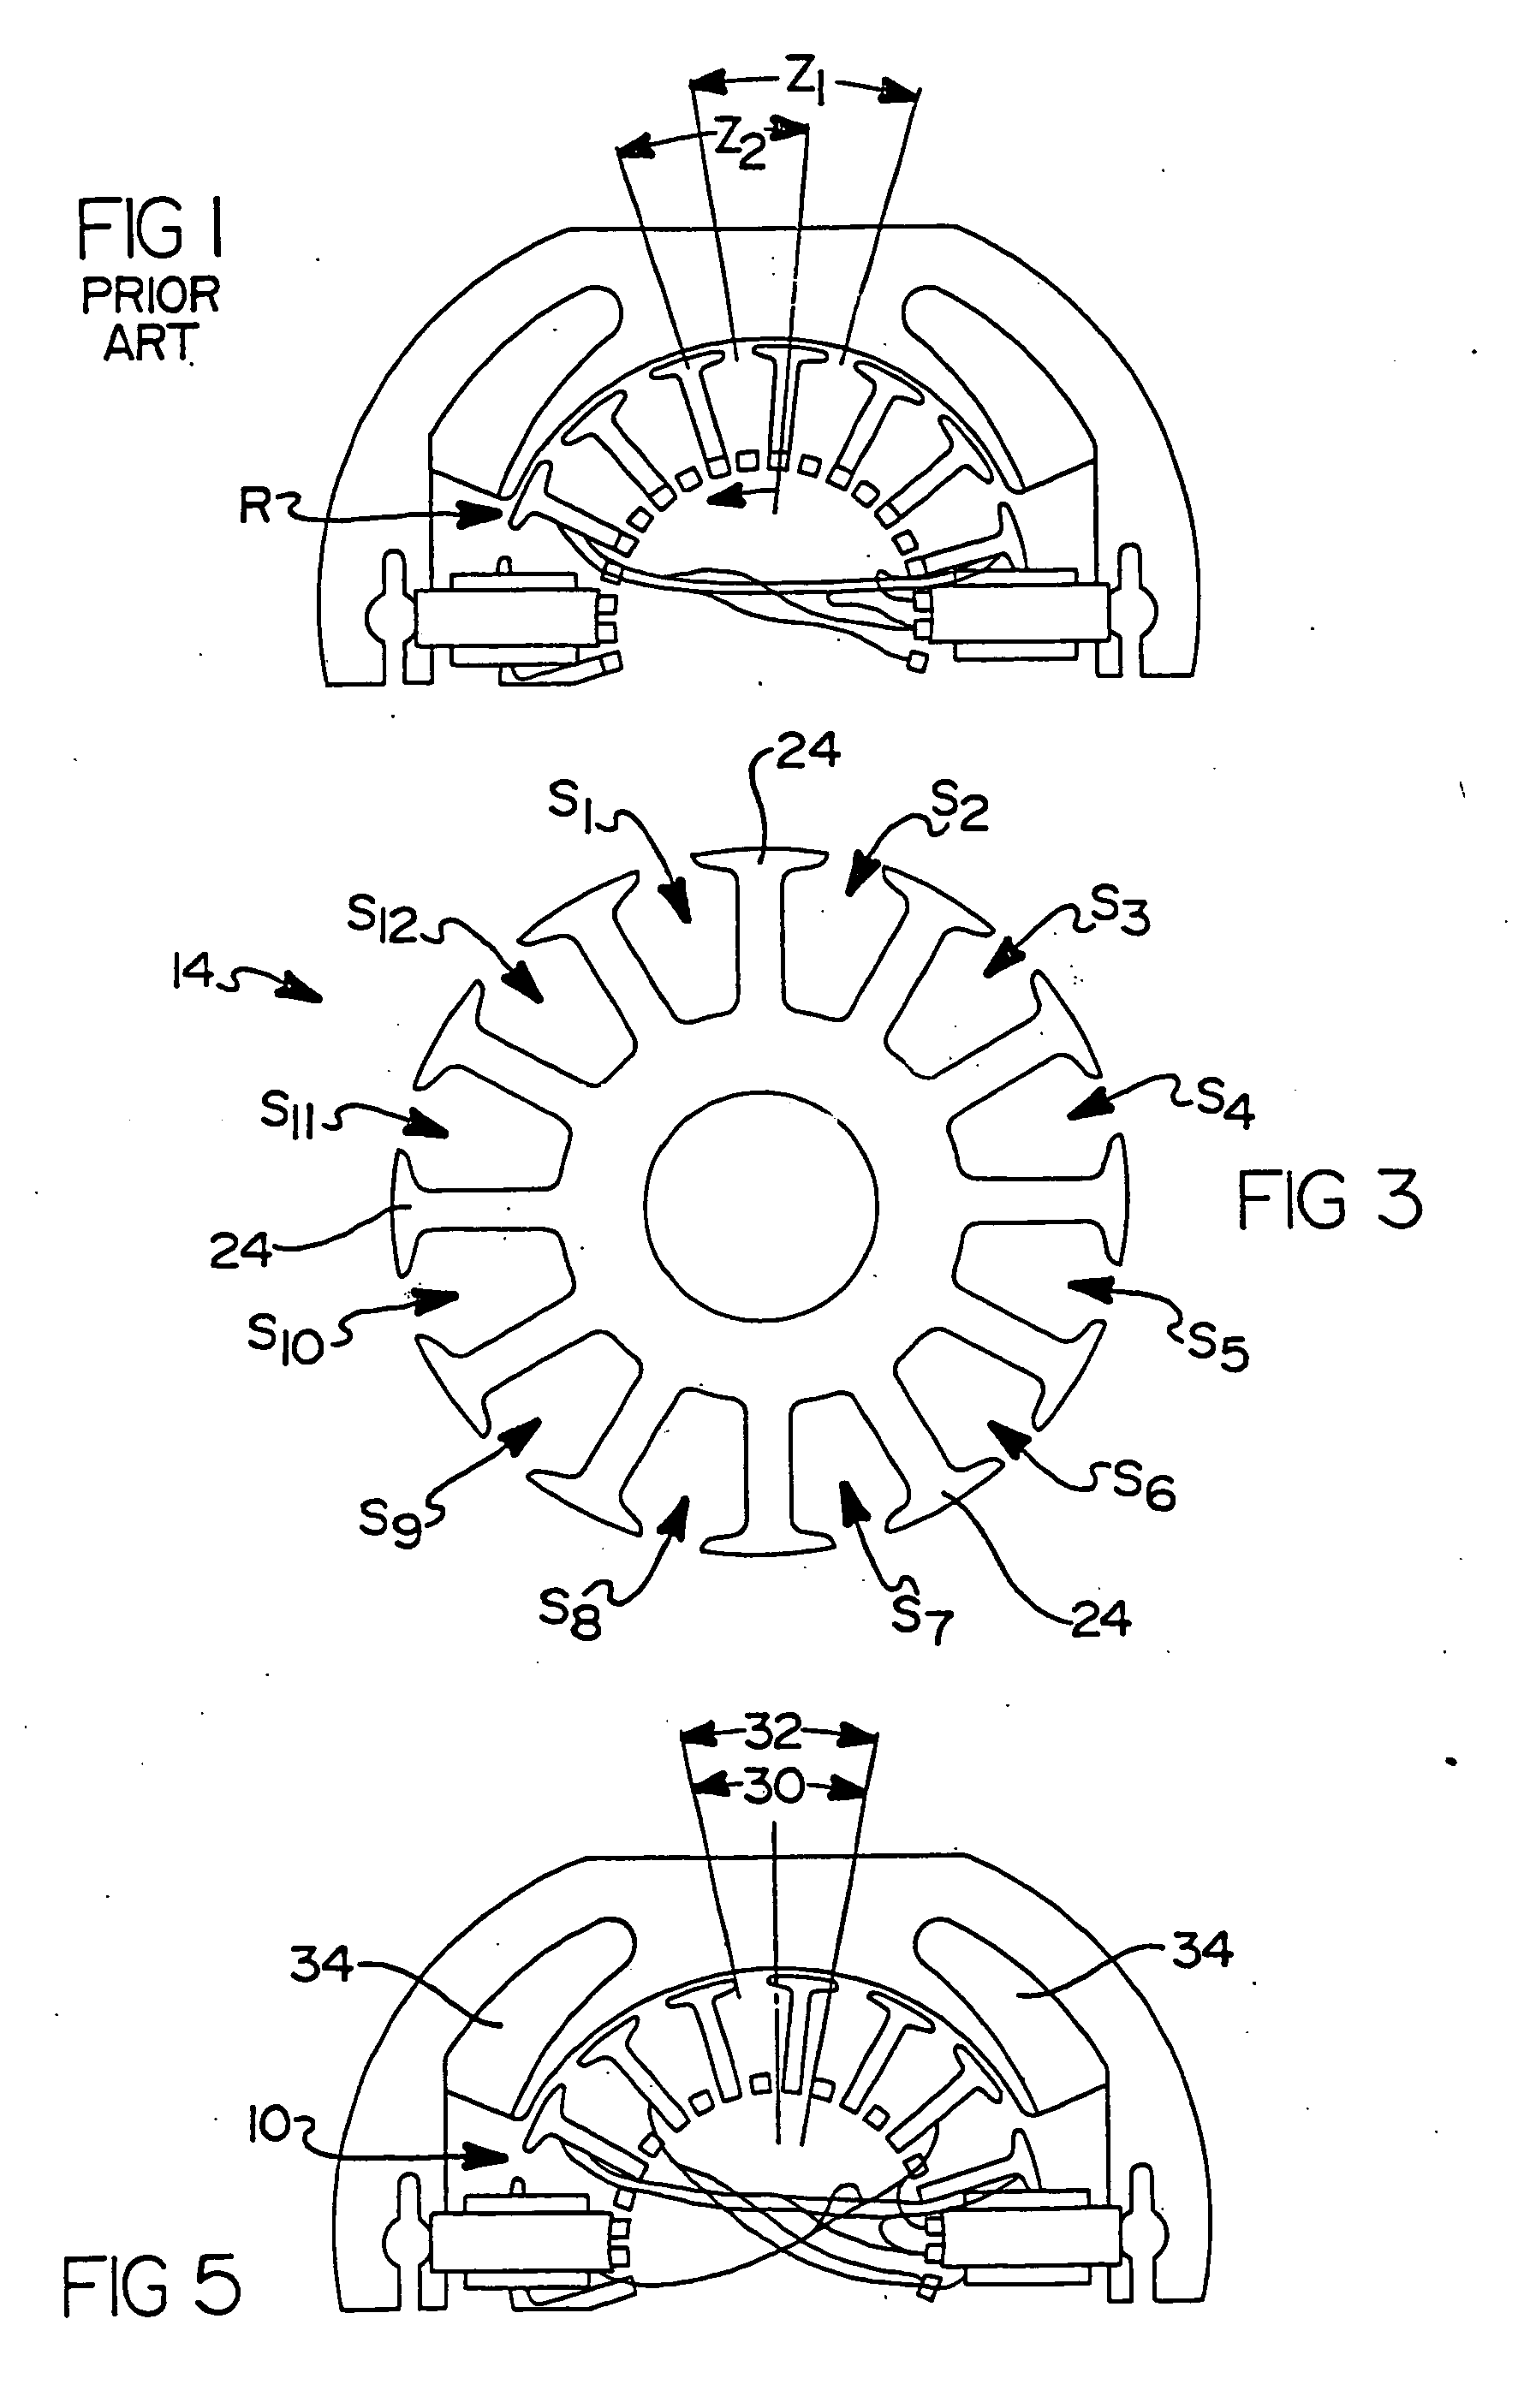 Motor armature having distributed windings for reducing arcing